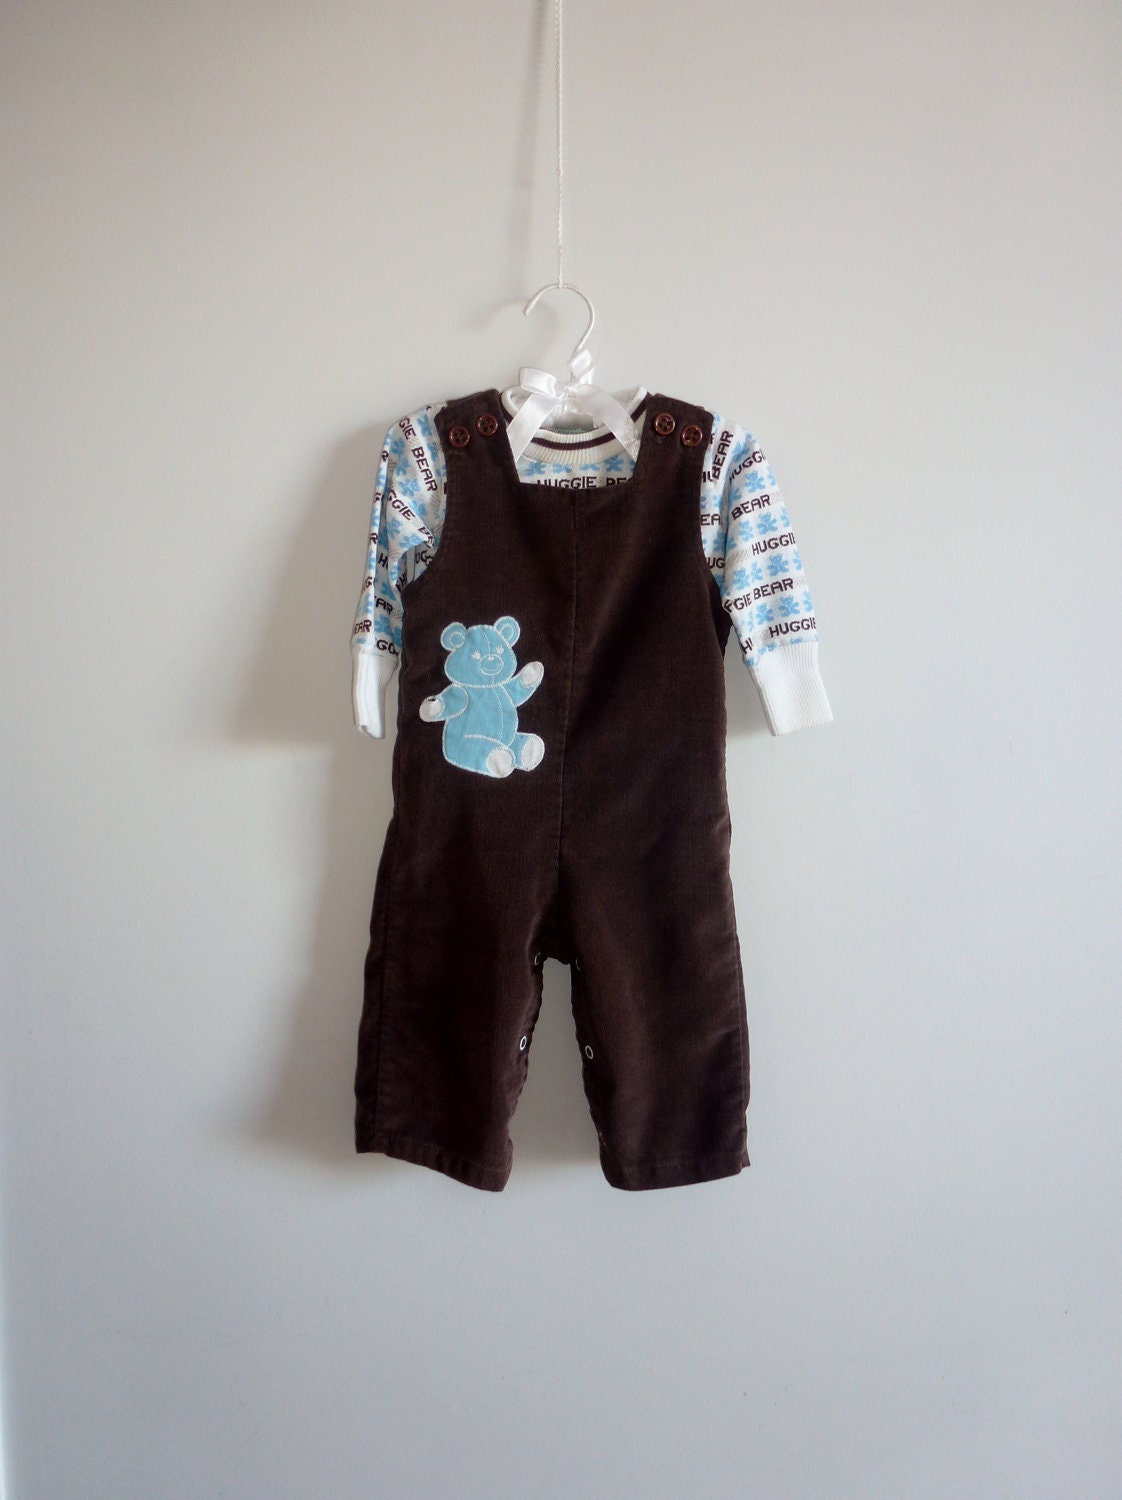 Vintage Brown Teddy Bear Baby Outfit - Apearsvintagegoodies